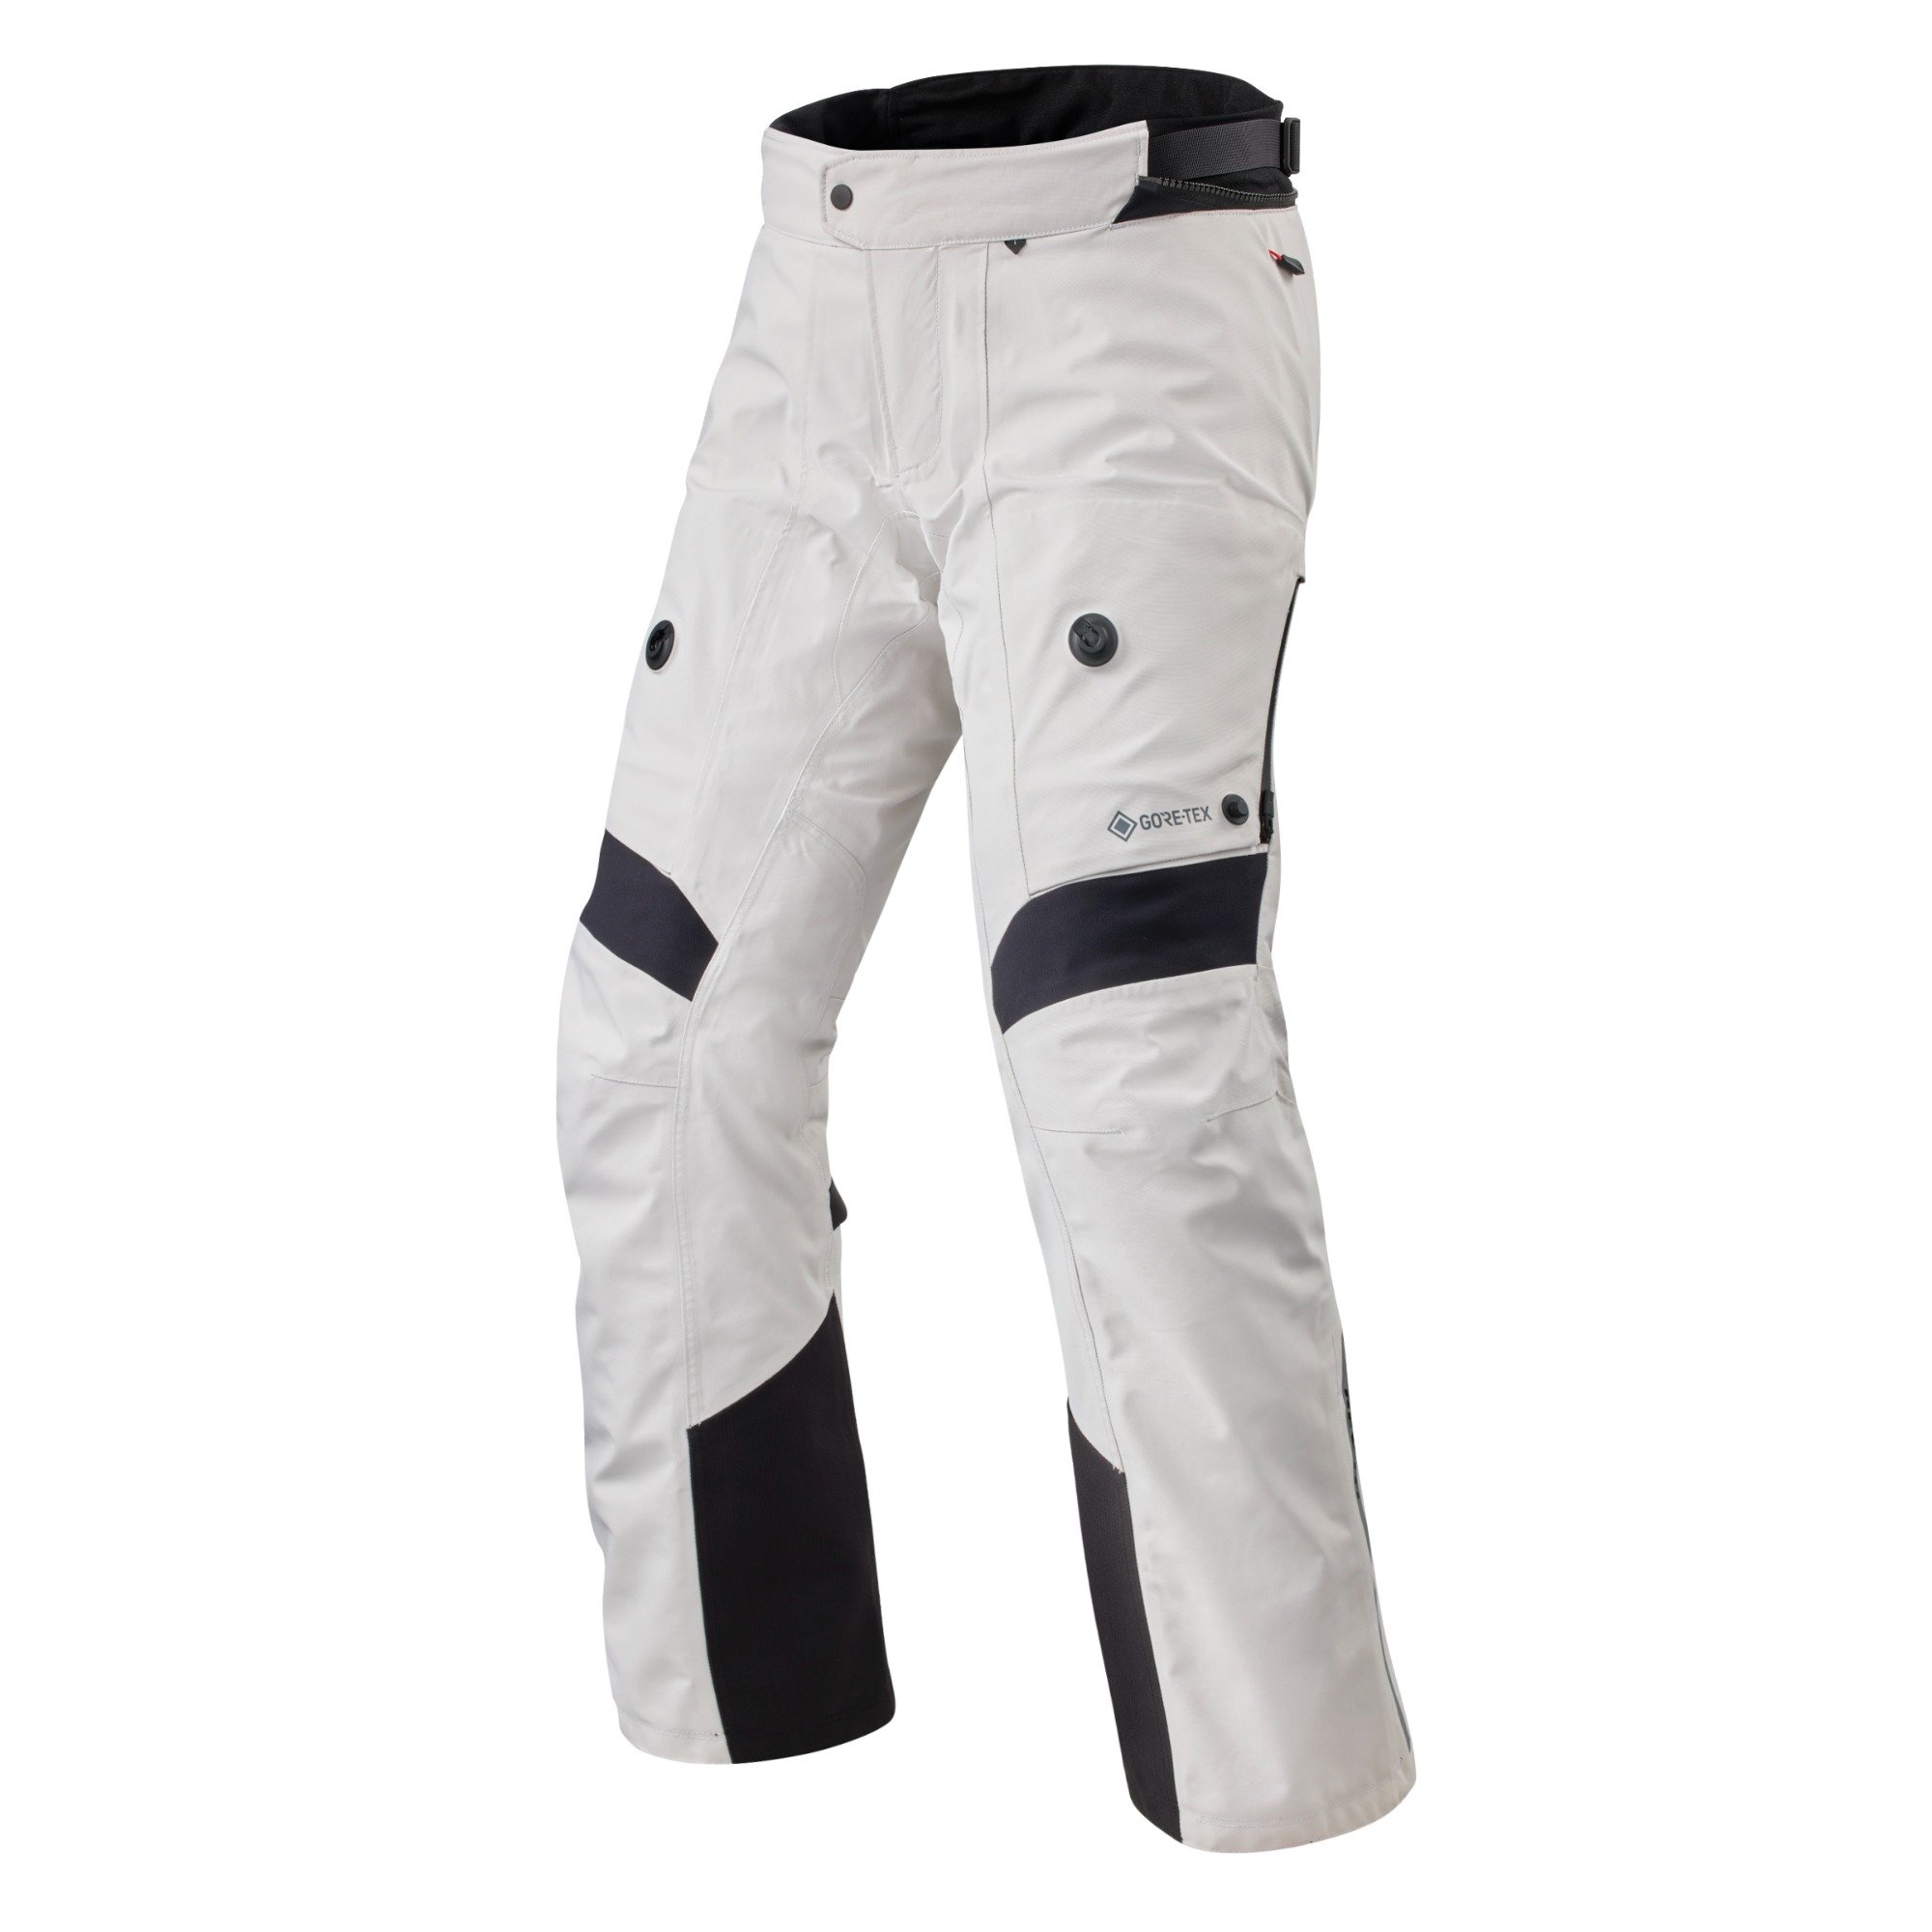 Image of REV'IT! Pants Poseidon 3 GTX Silver Black Short Motorcycle Pants Size XL EN